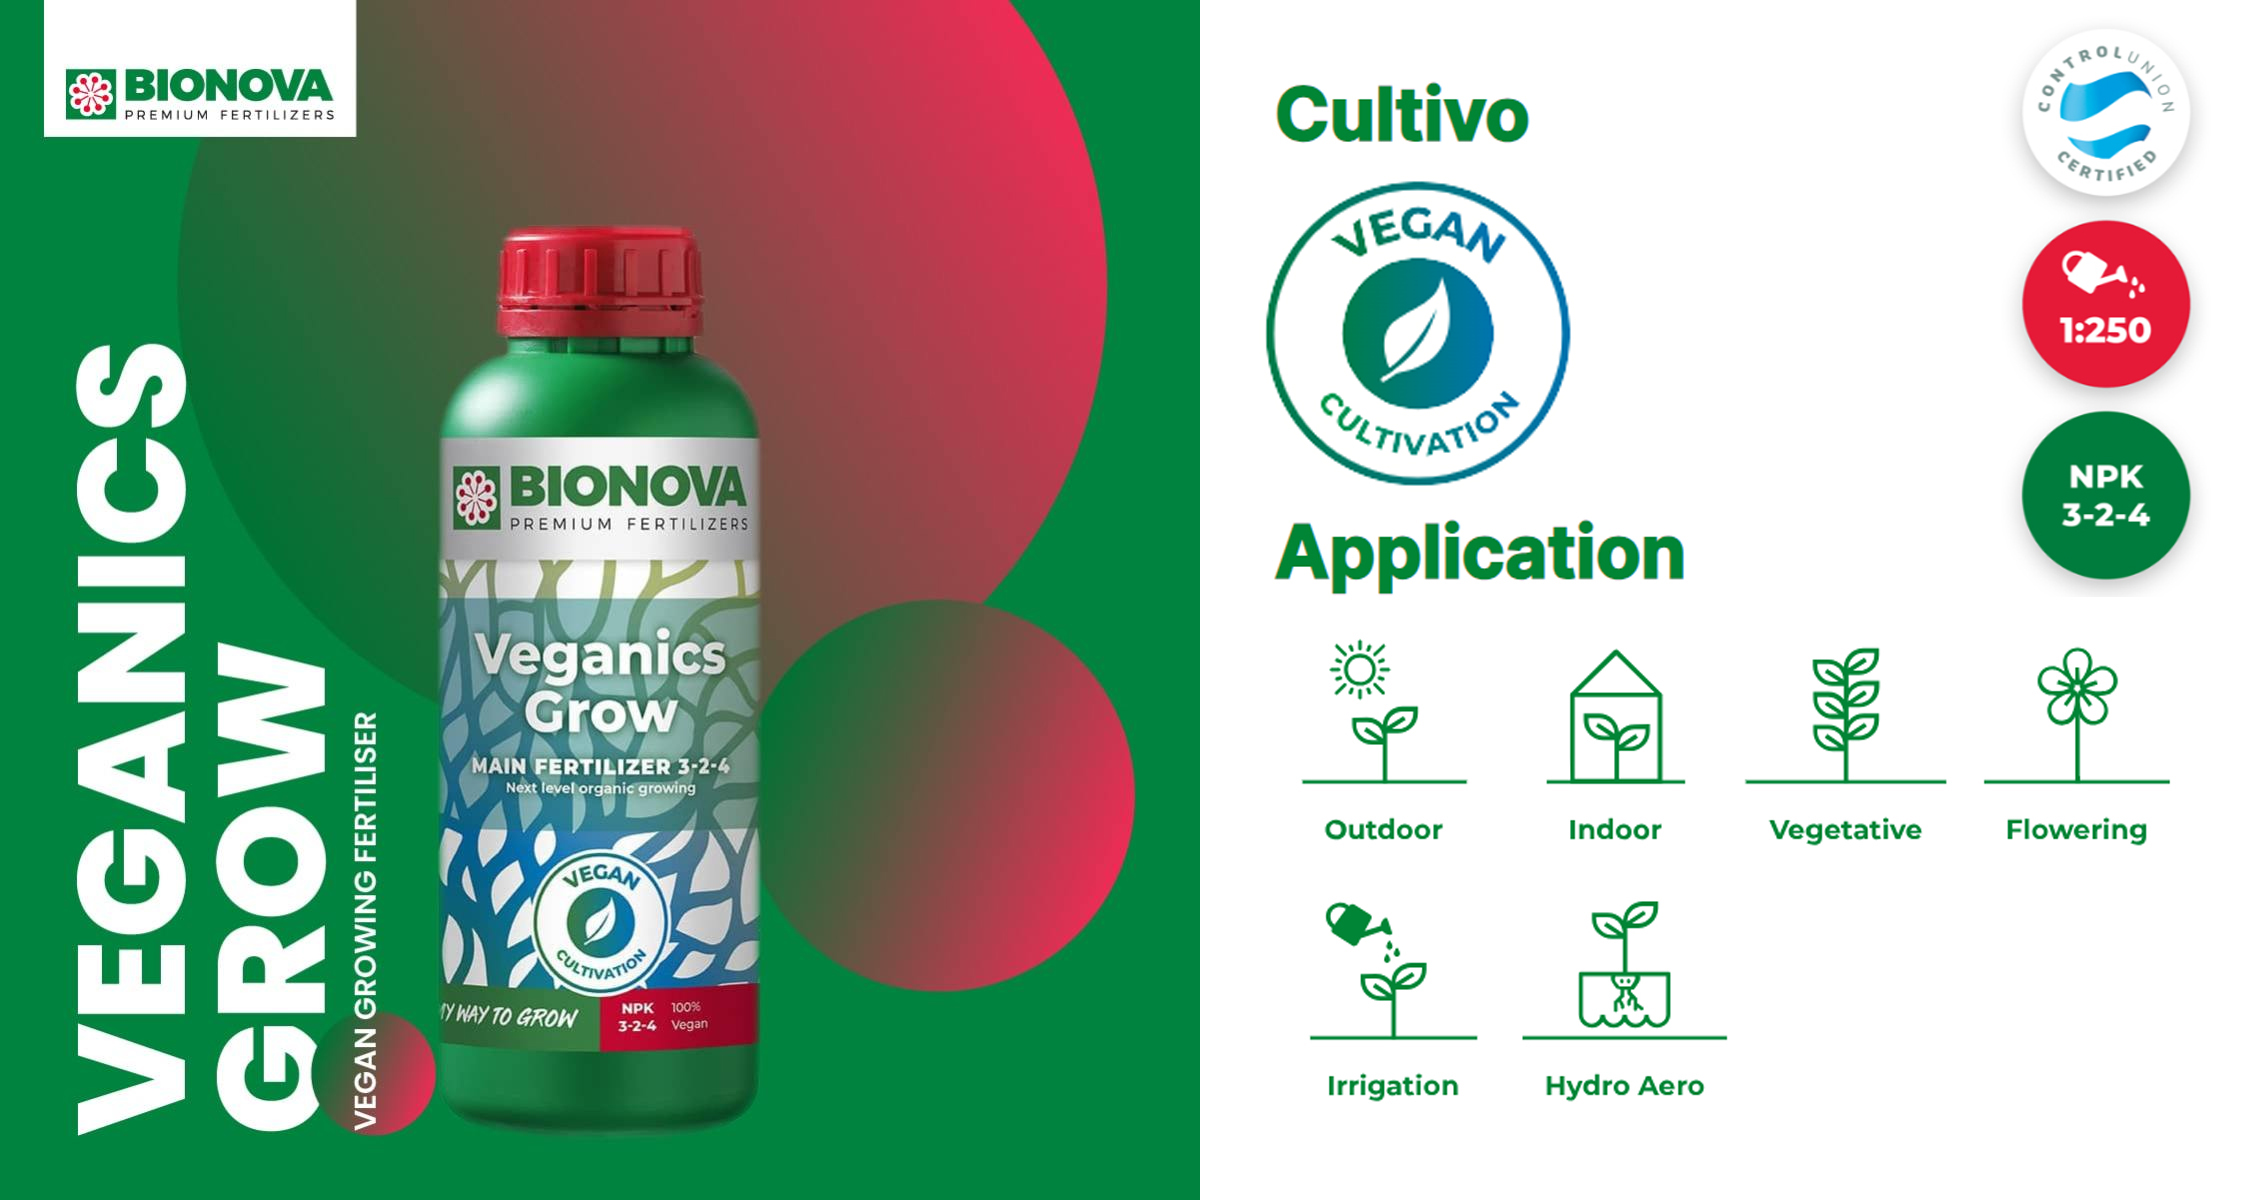 Veganics Grow fertilizante crecimiento vegano | BioNova